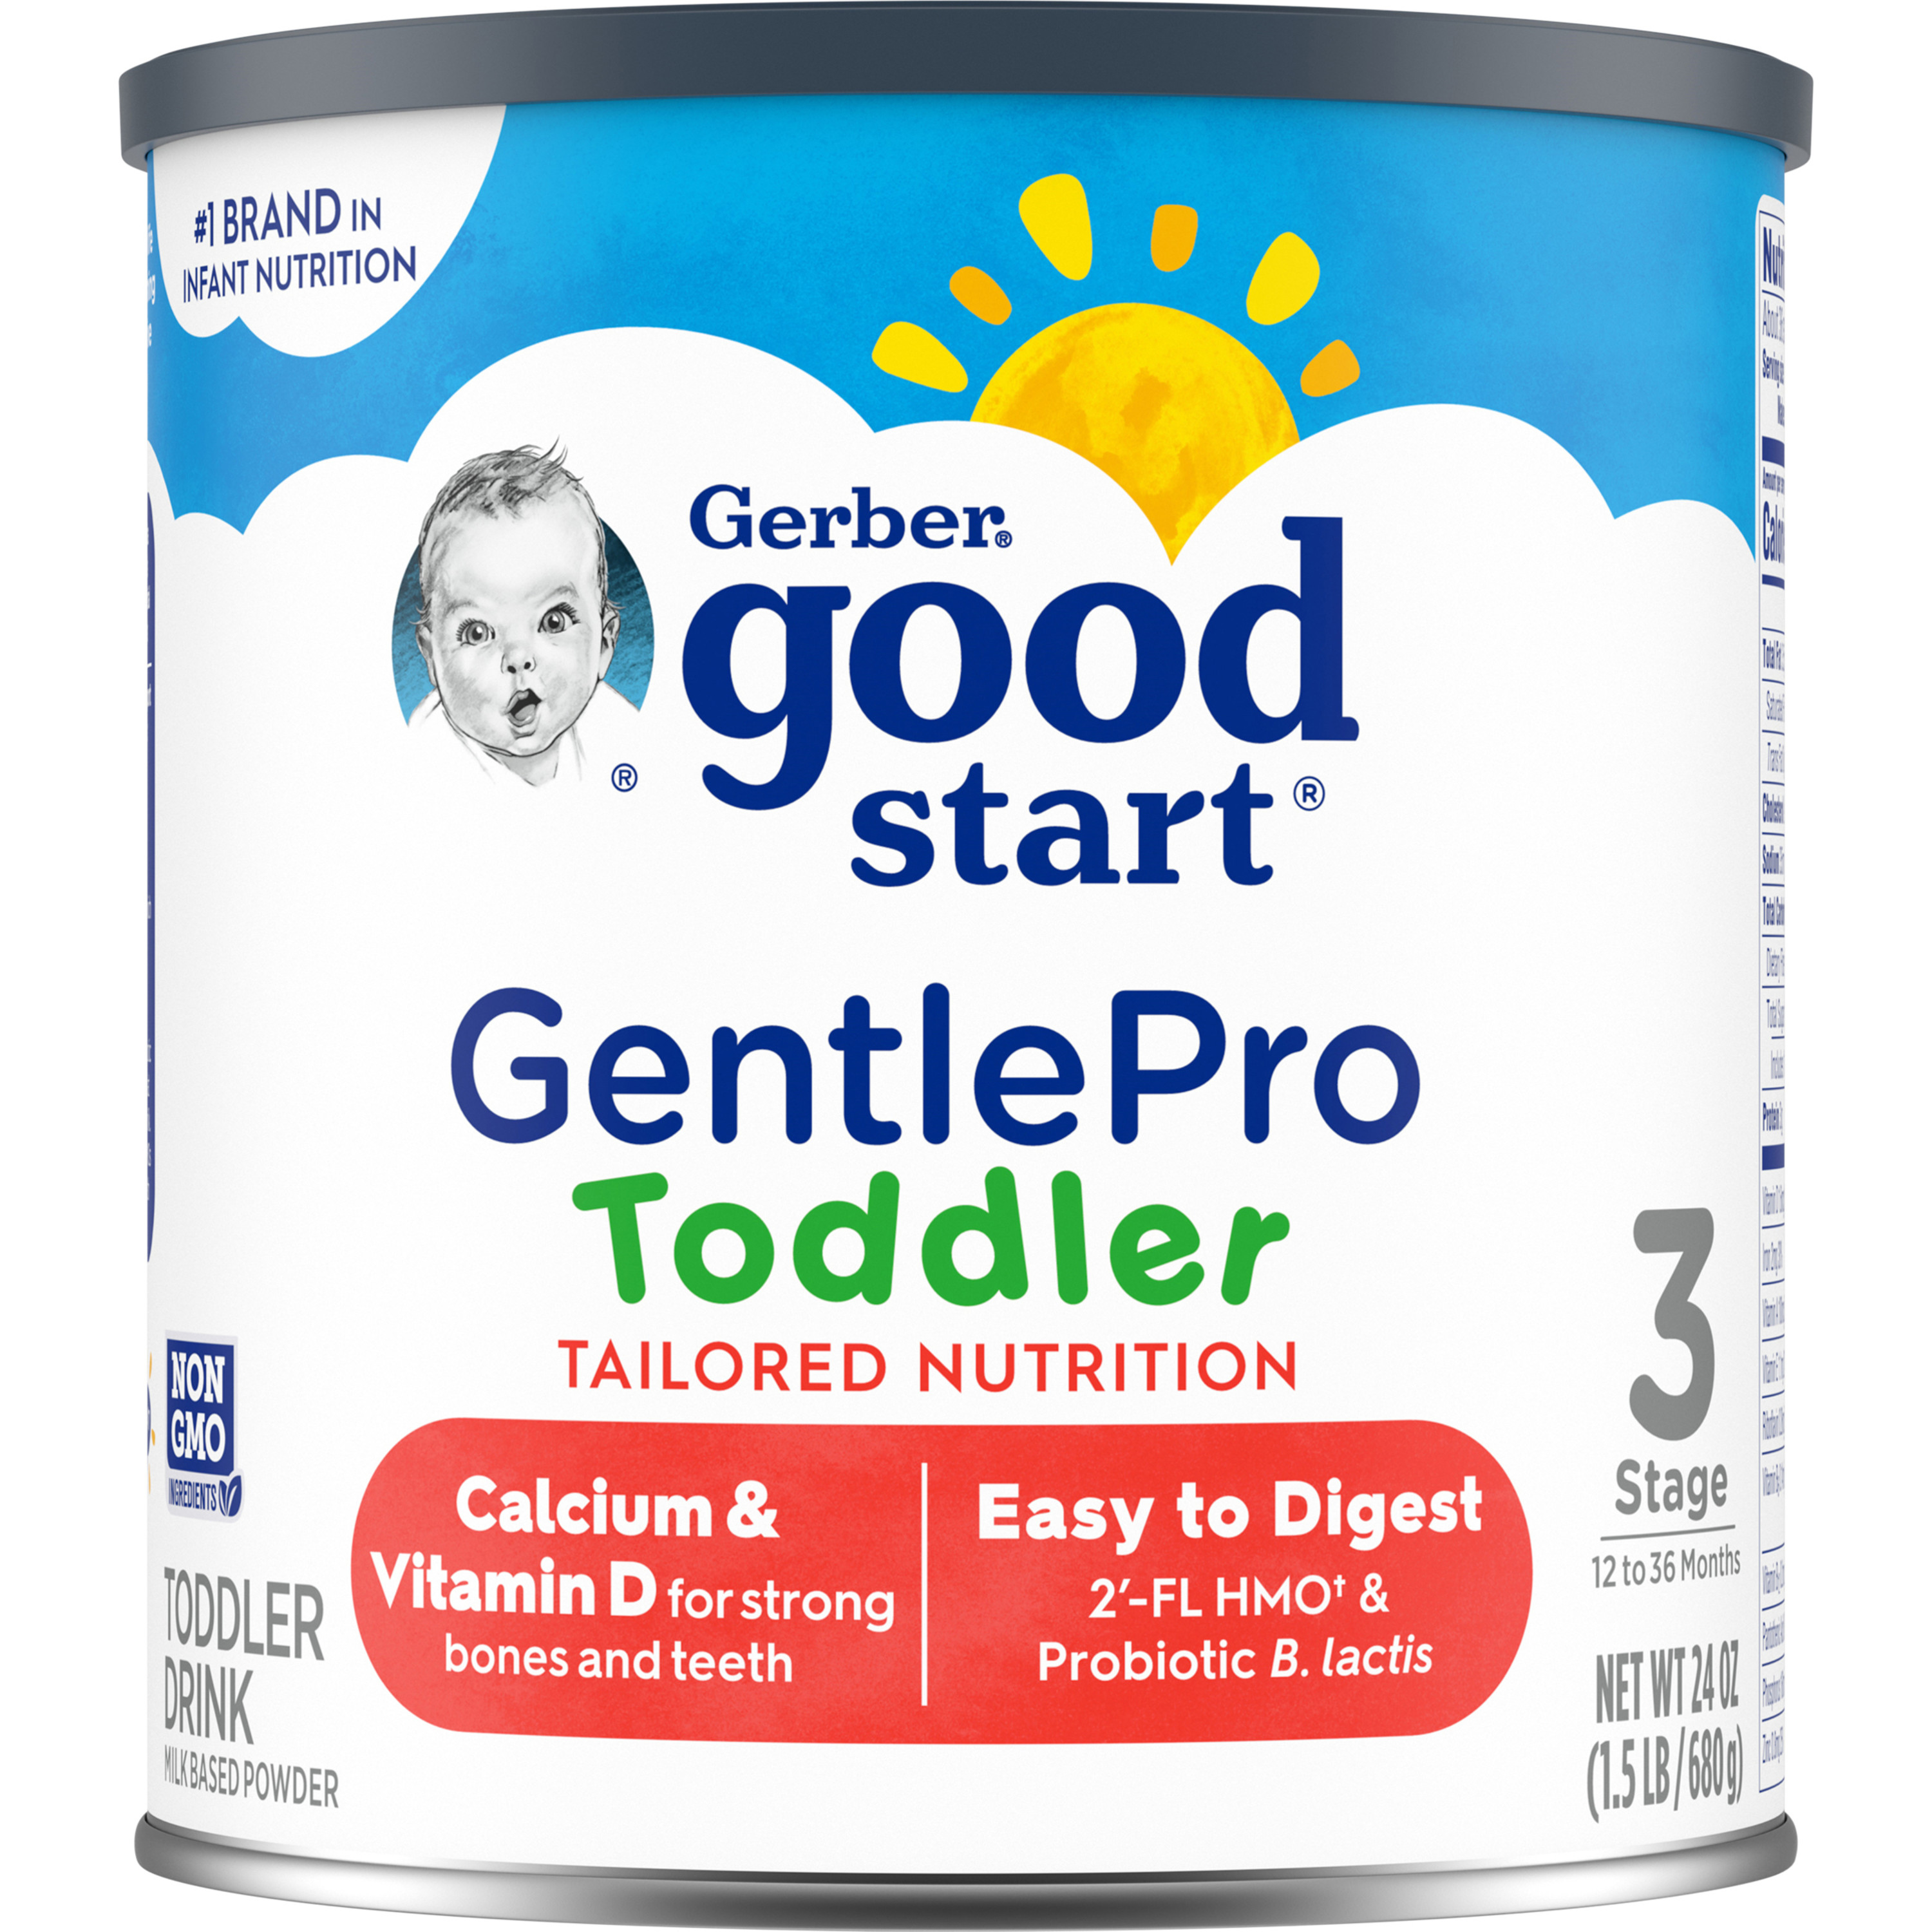 Gerber Good Start Grow Powder Toddler Formula, 24 oz Canister - image 1 of 8